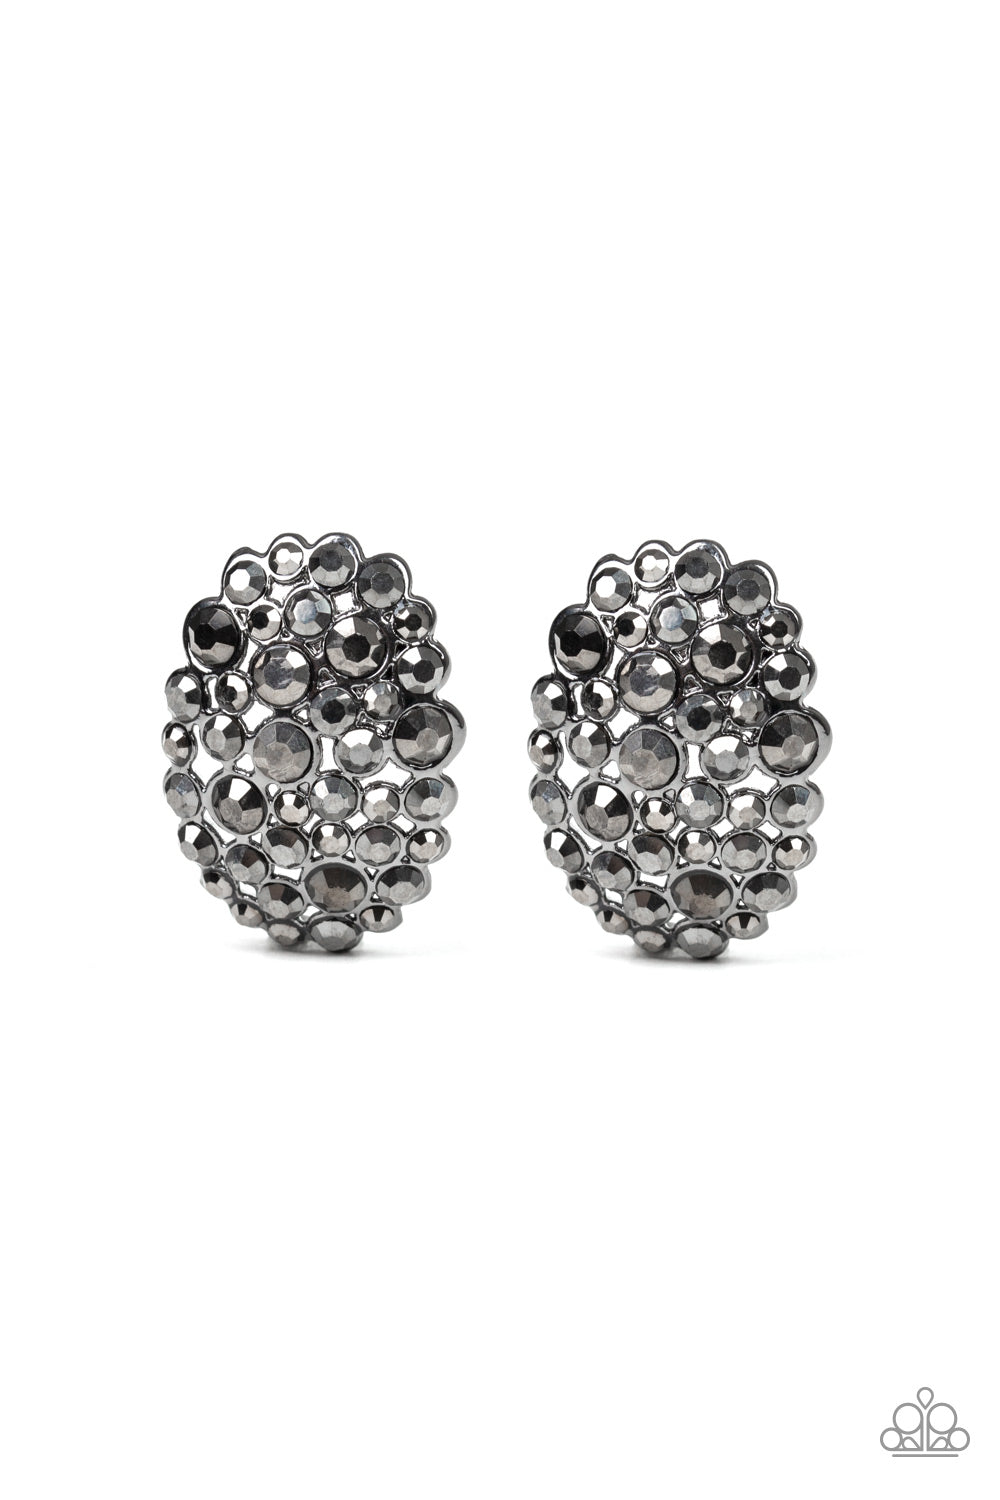 Paparazzi Daring Dazzle - Black - Hematite Rhinestones - Post Earrings - $5 Jewelry with Ashley Swint